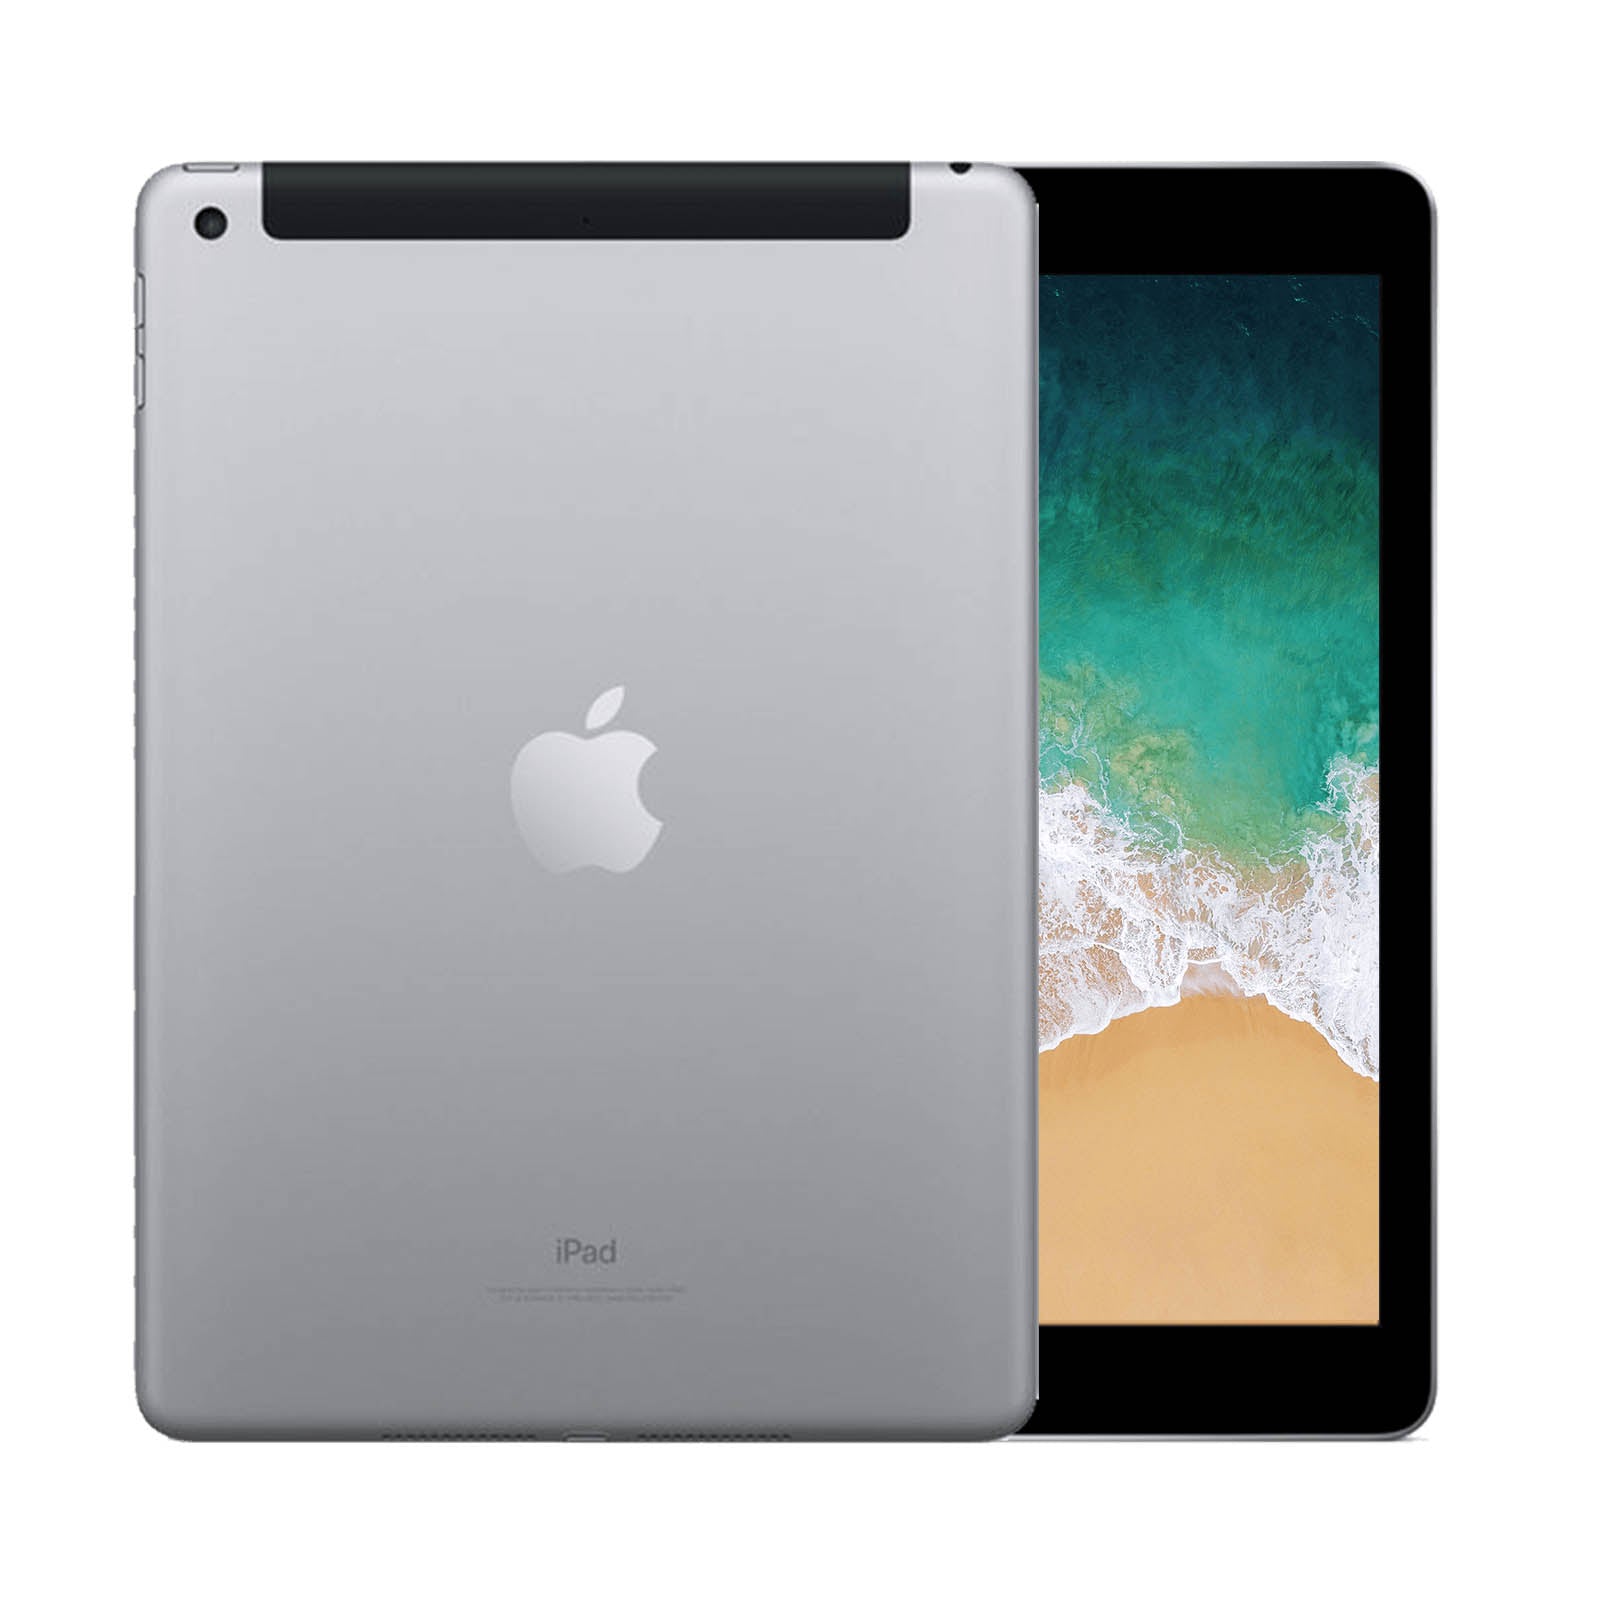 Apple iPad 4 32GB Black - WiFi - Good 32GB Black Good